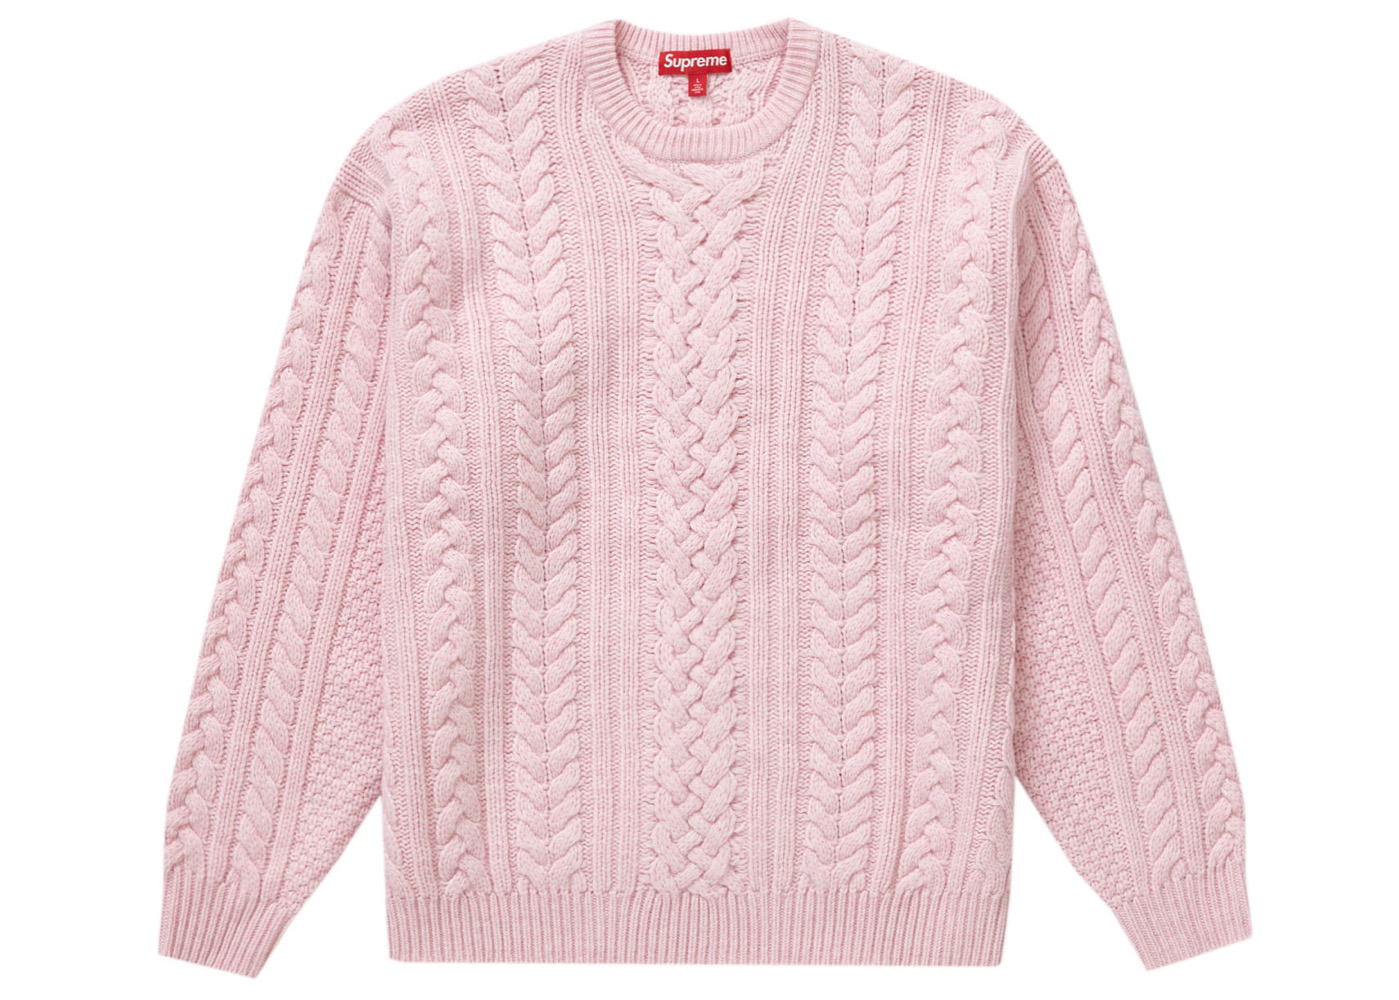 Supreme : Applique Cable Knit Sweater★Mサイズ状態